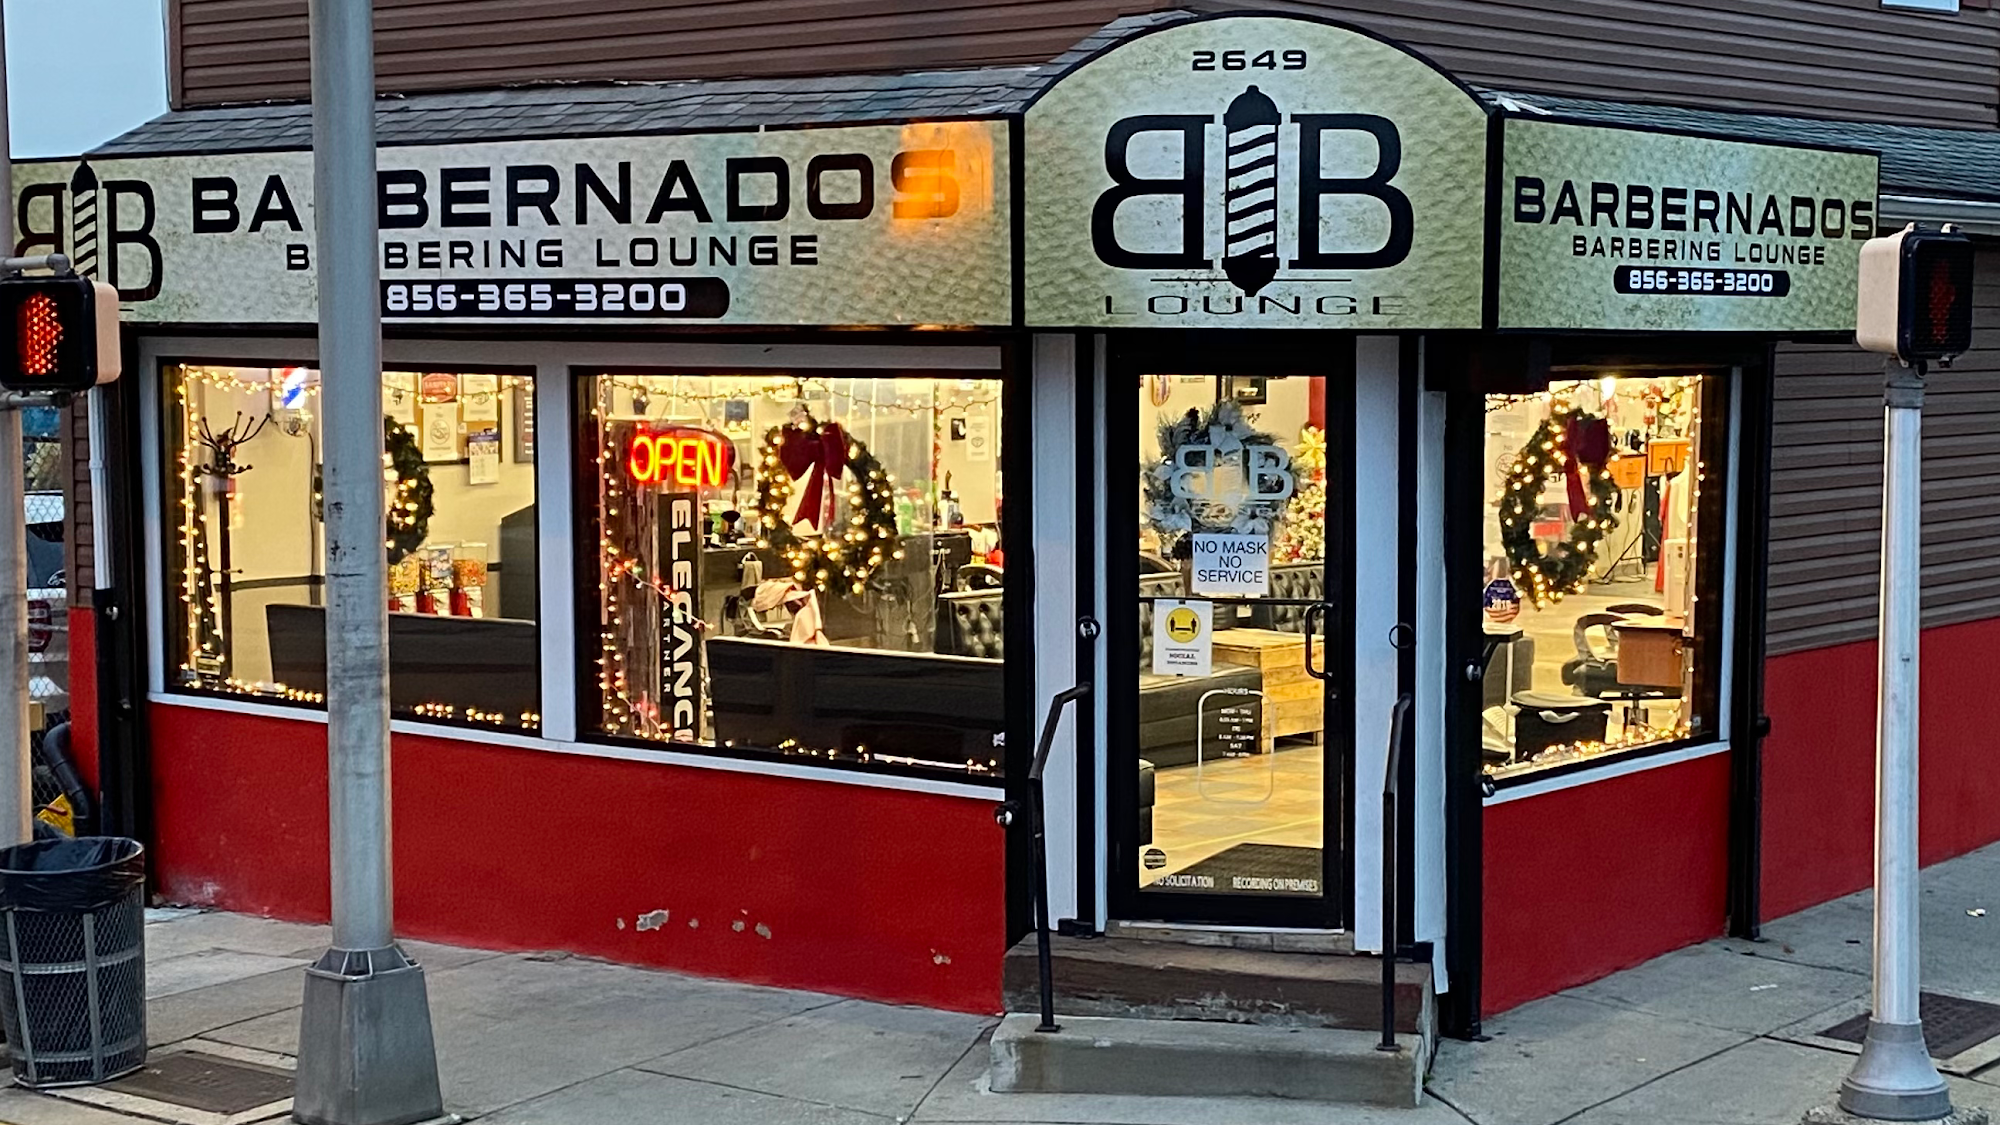 Barbernado's Barbering Lounge, LLC